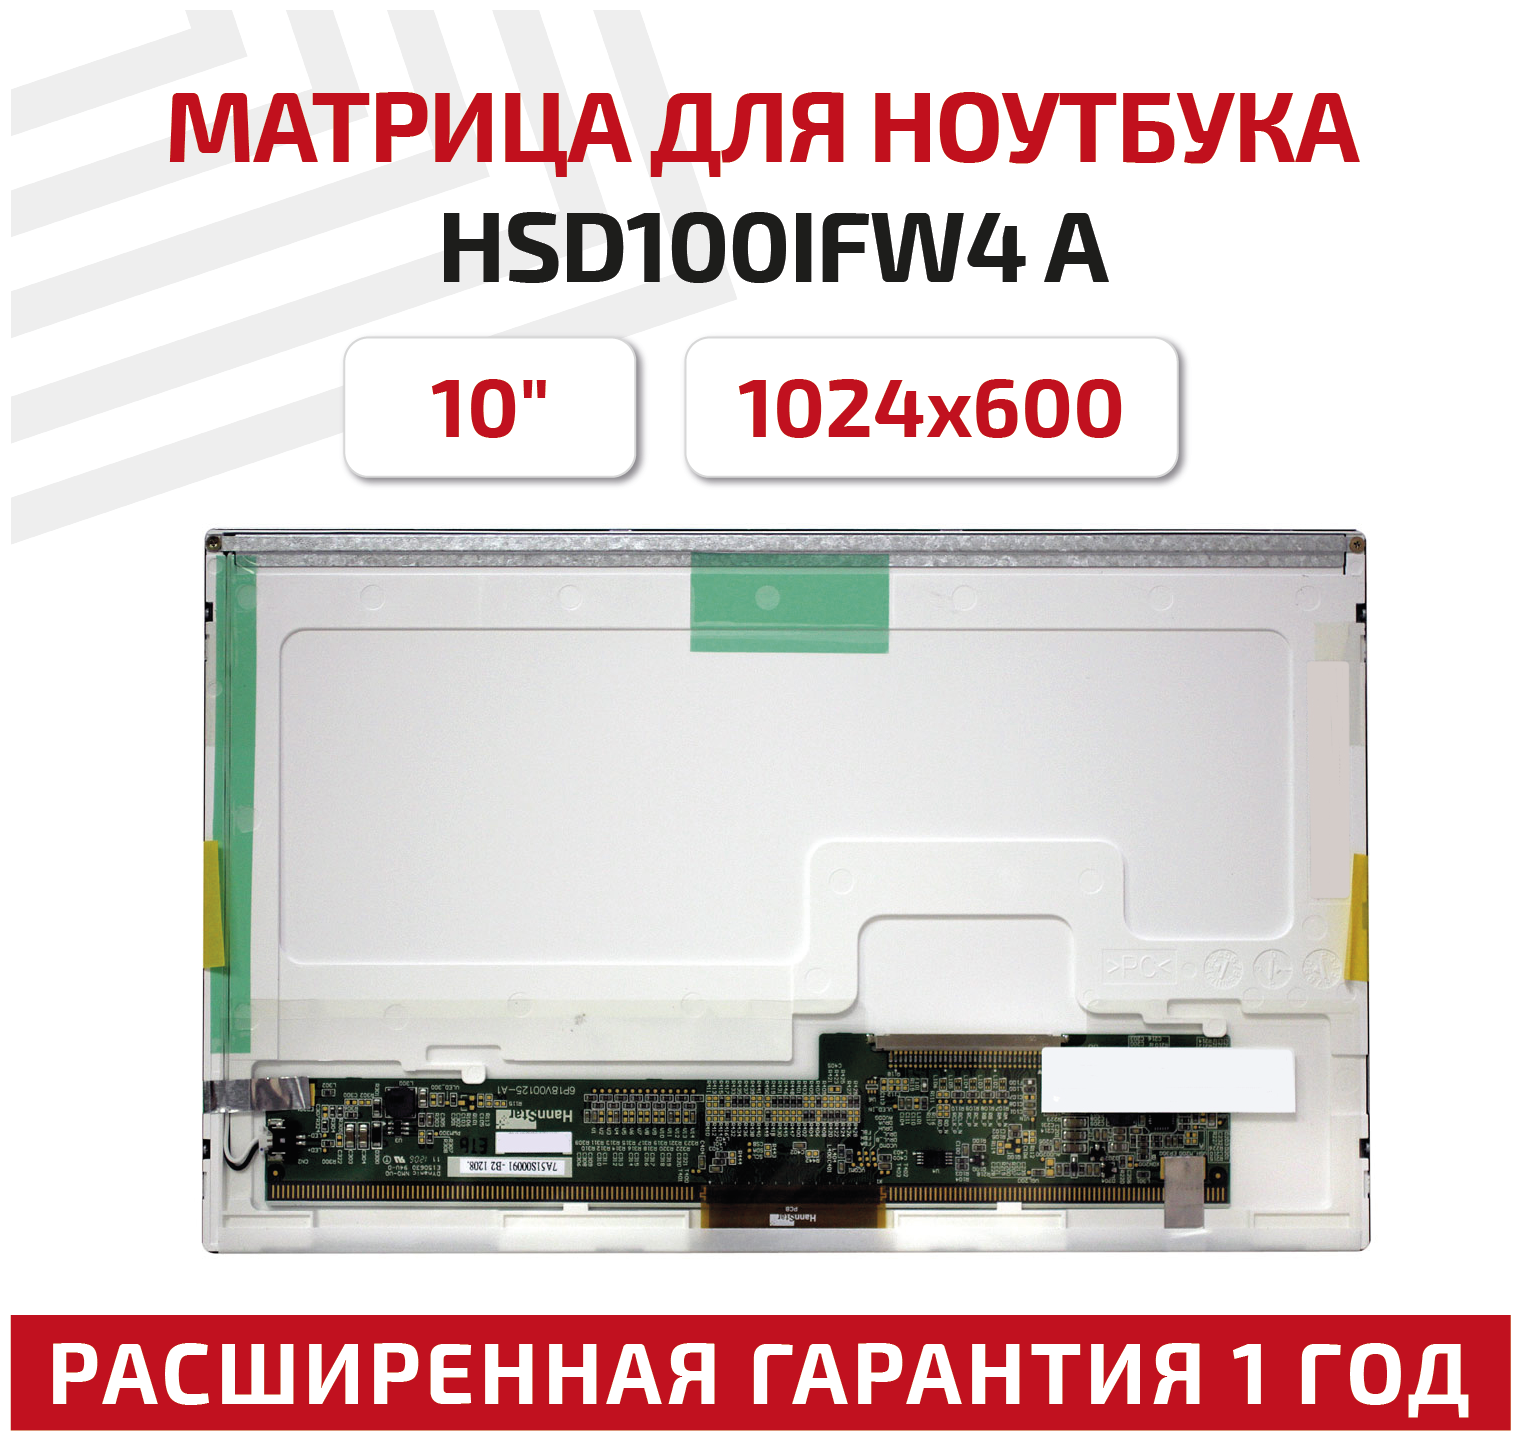 Матрица (экран) для ноутбука HSD100IFW4 A, 10", 1024x600, Normal (стандарт), 30-pin, светодиодная (LED), матовая